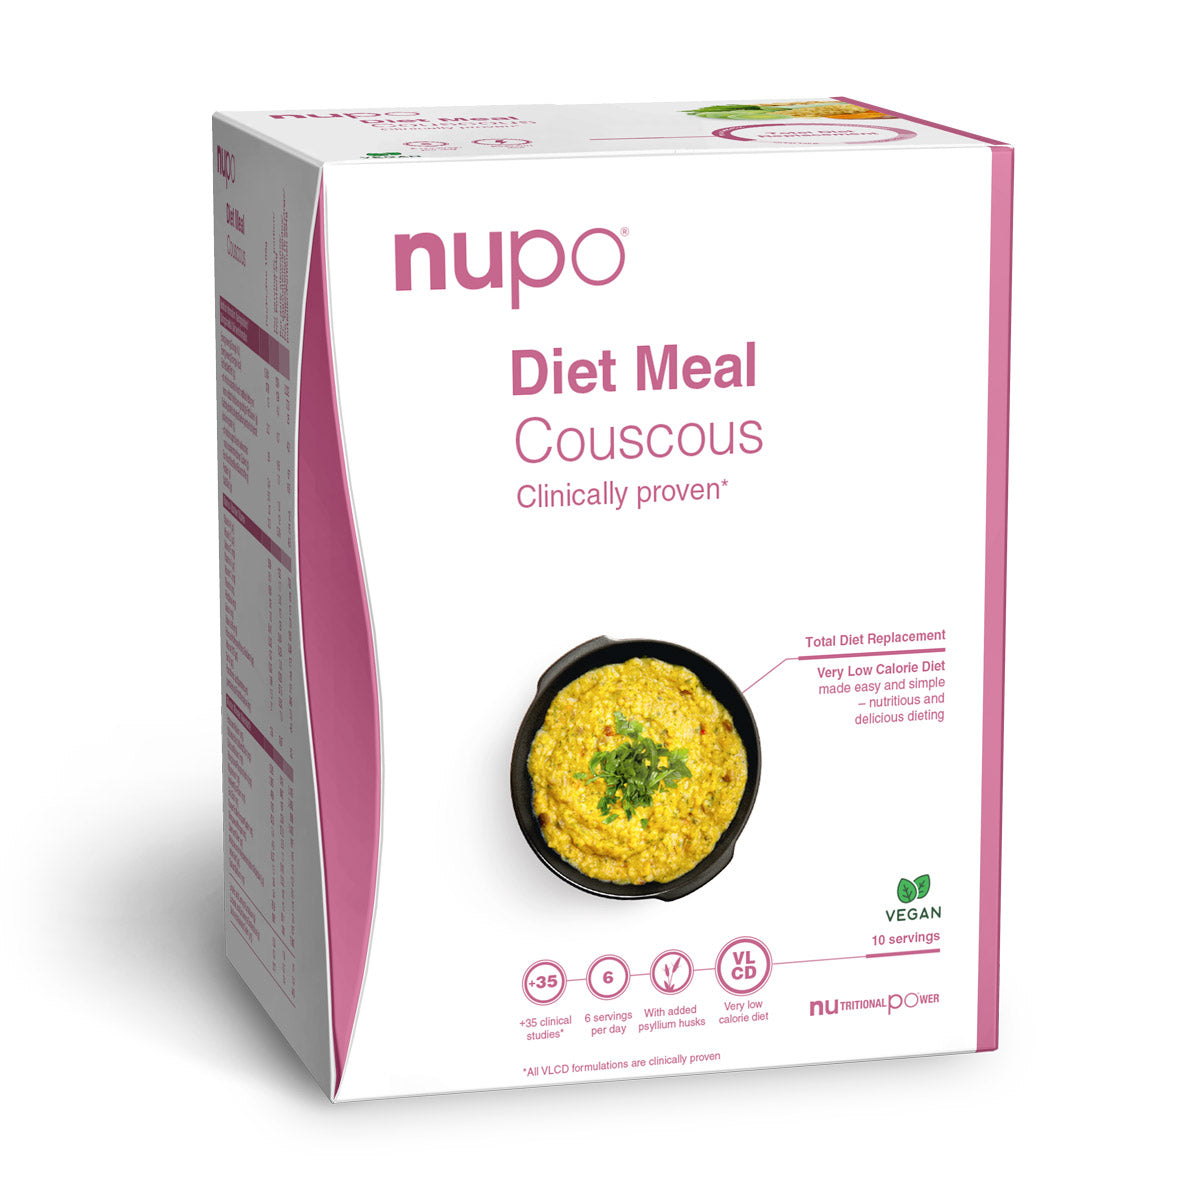 Se Nupo Diet Meal (340g) - Couscous hos Muscle House